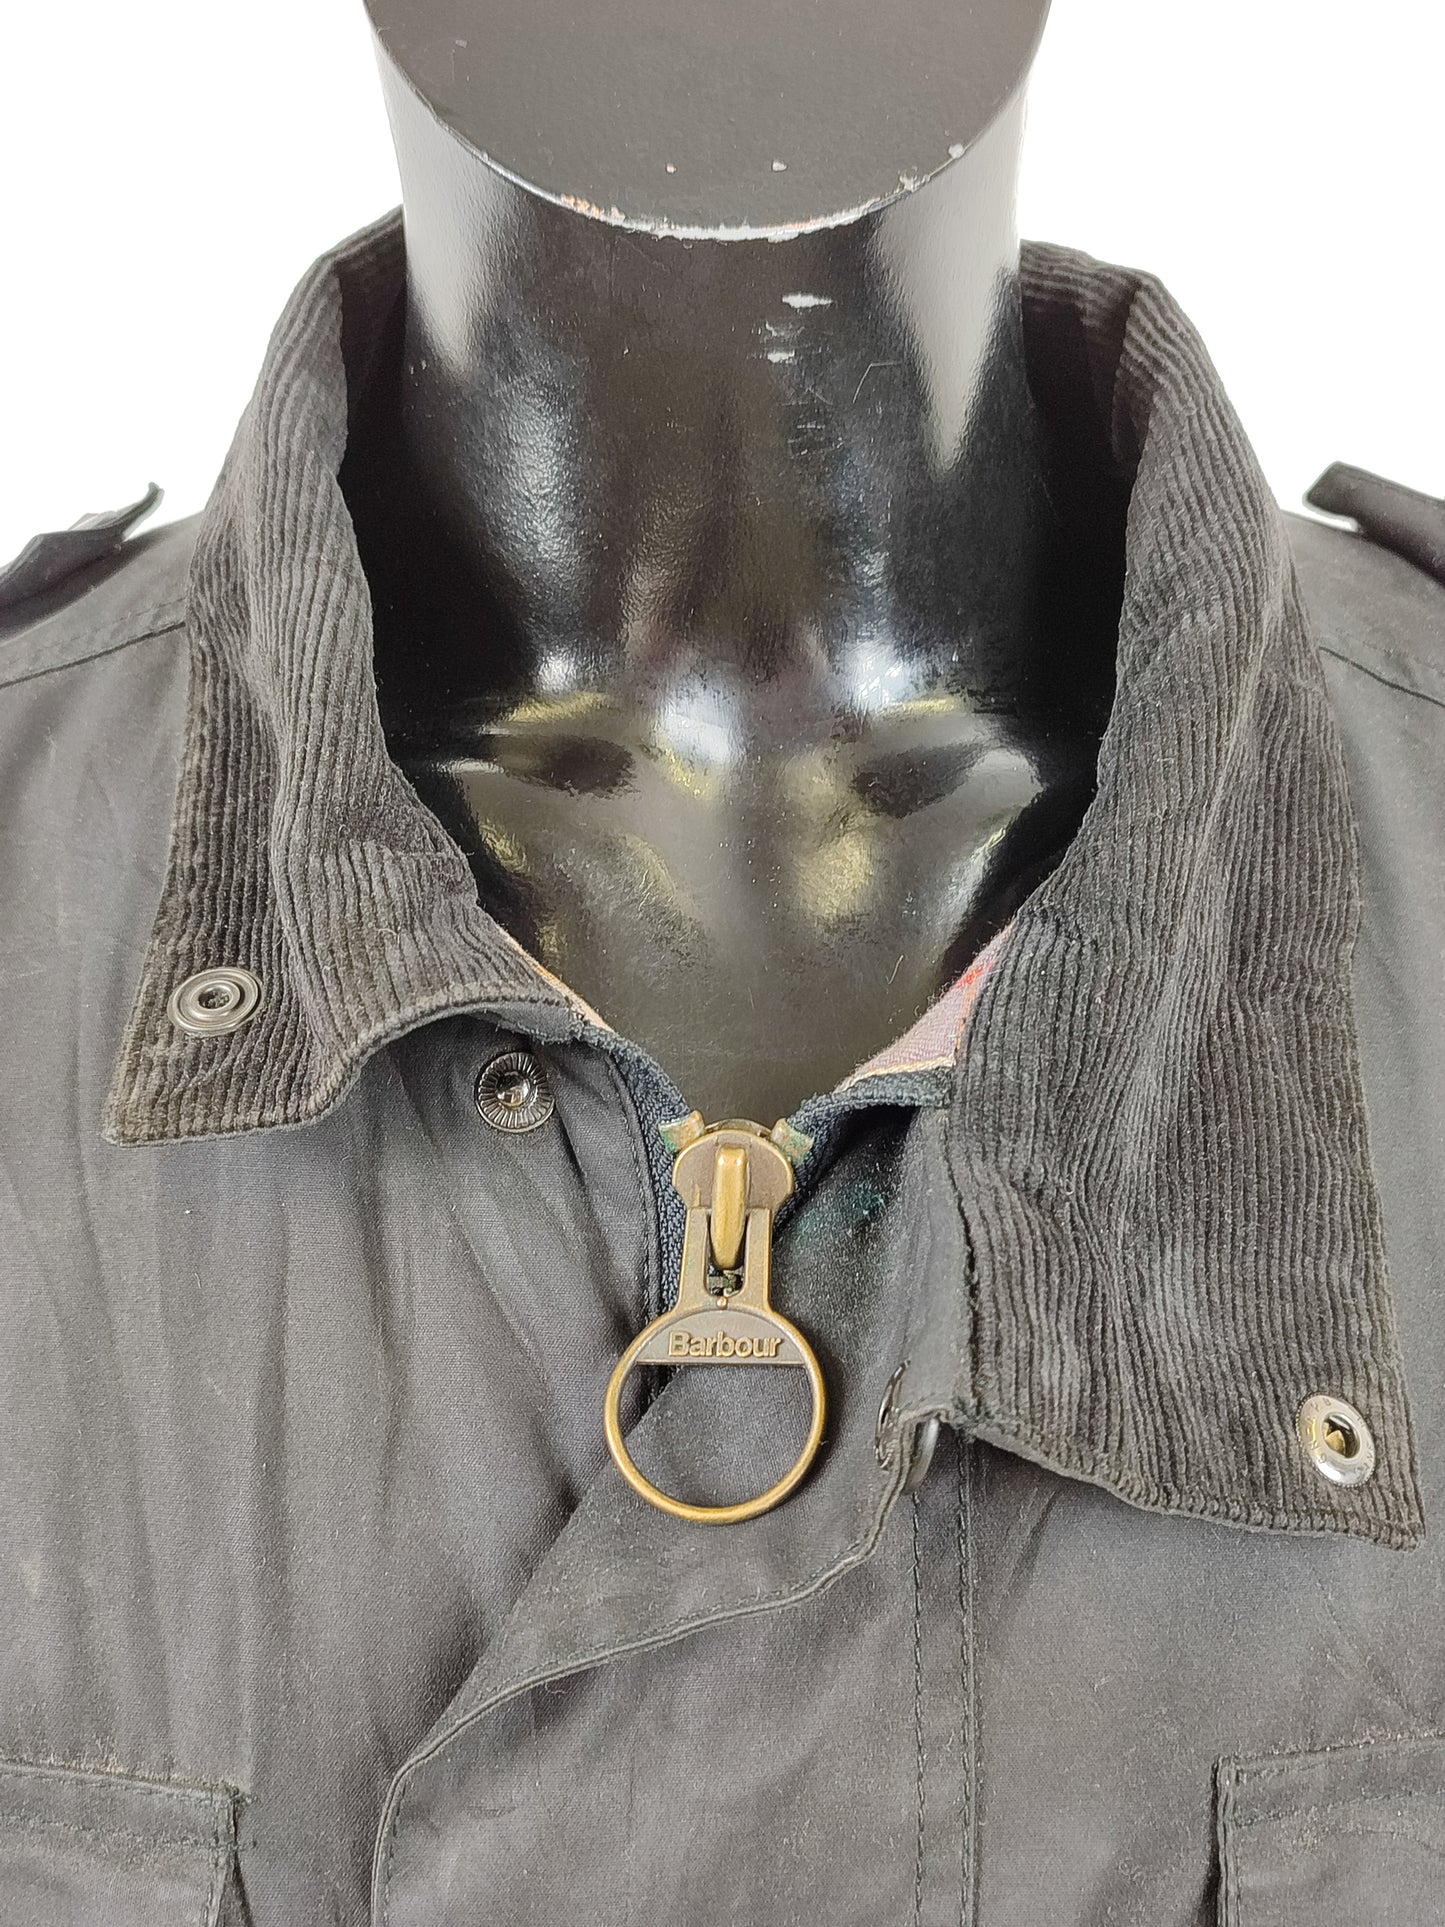 Giacca Barbour da uomo nero cerato Trooper XLarge - Man Trooper Wax Jacket size XL